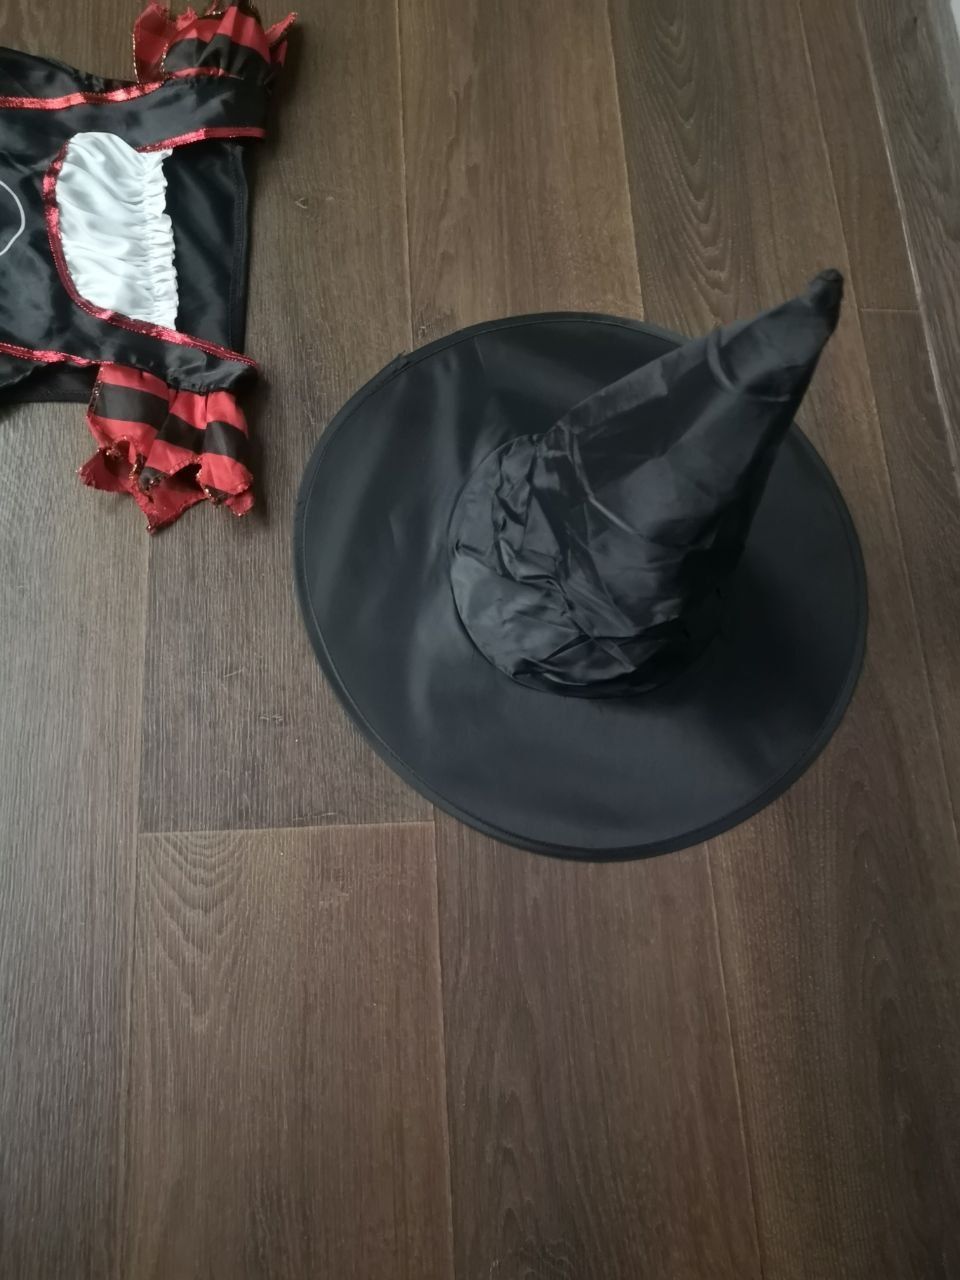 Карнавал колпак костюм шляпа ведьма платье 7 8 лет хелоуин хэлоуин 122